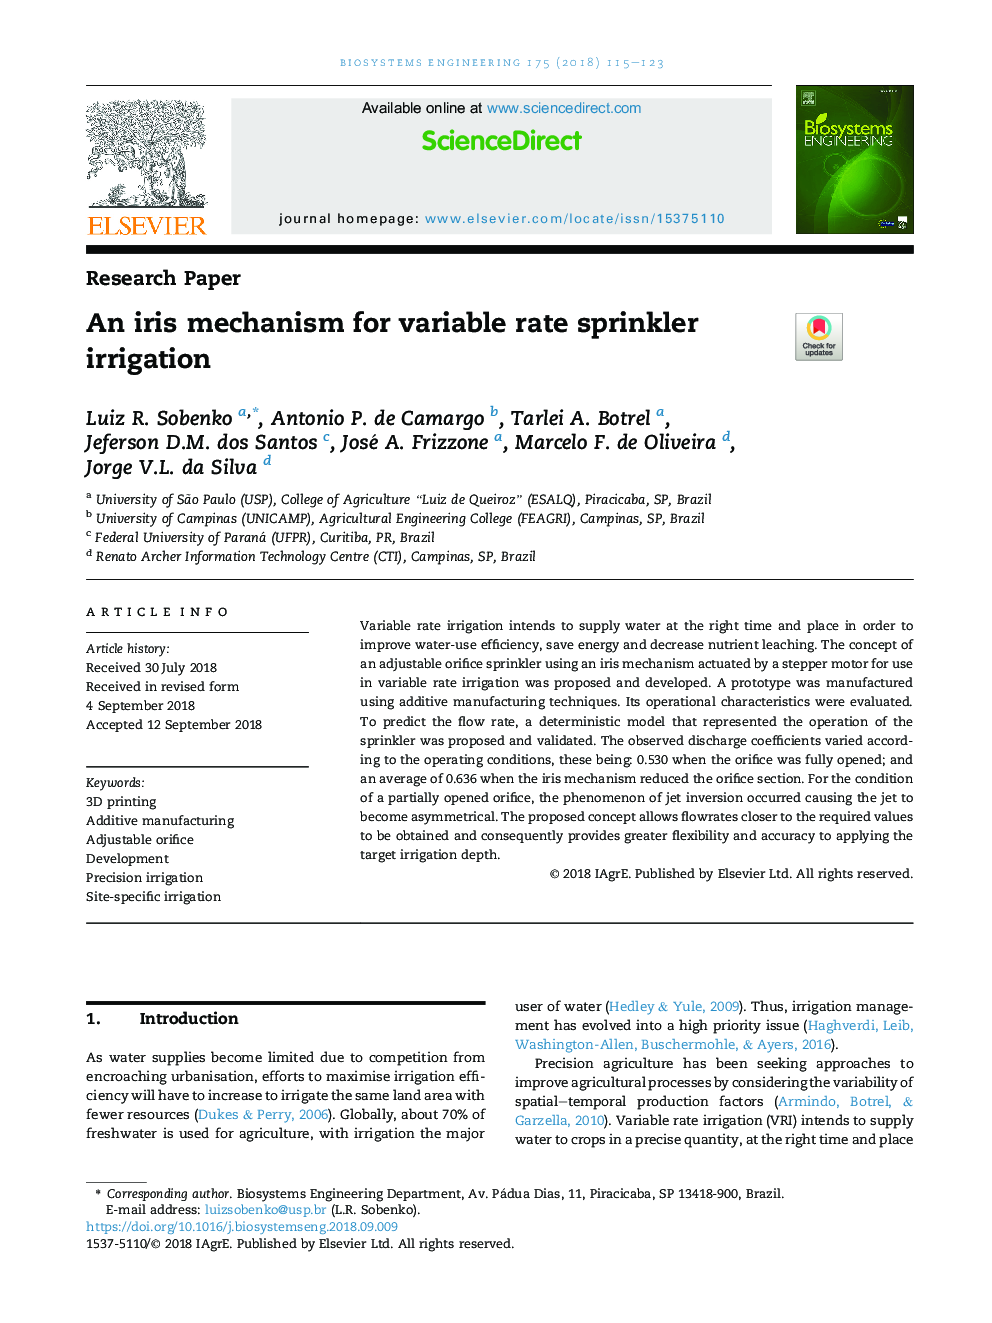 An iris mechanism for variable rate sprinkler irrigation